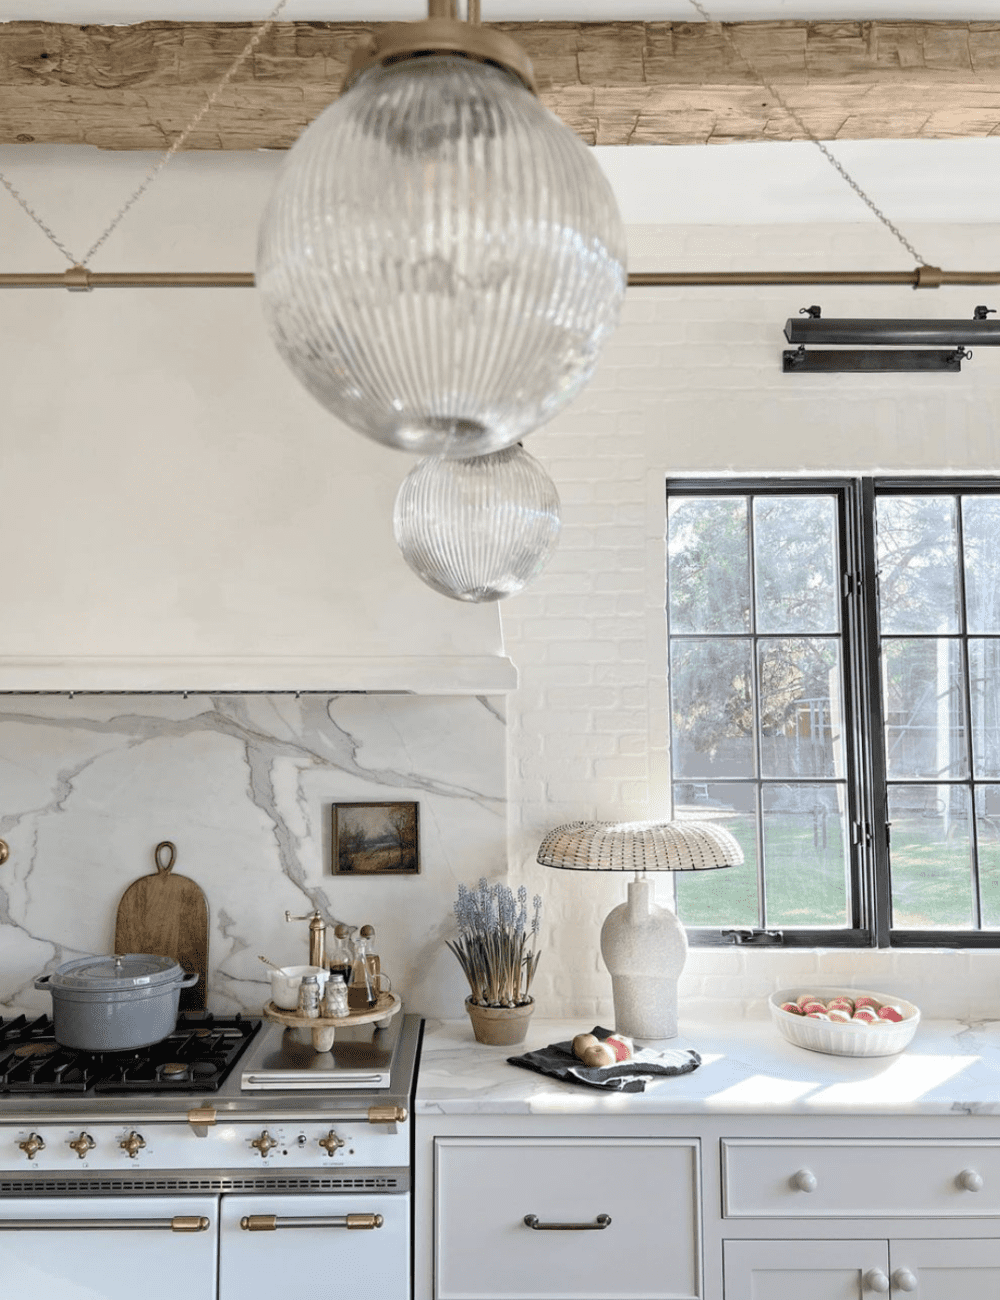 Kitchen with white brick backsplash